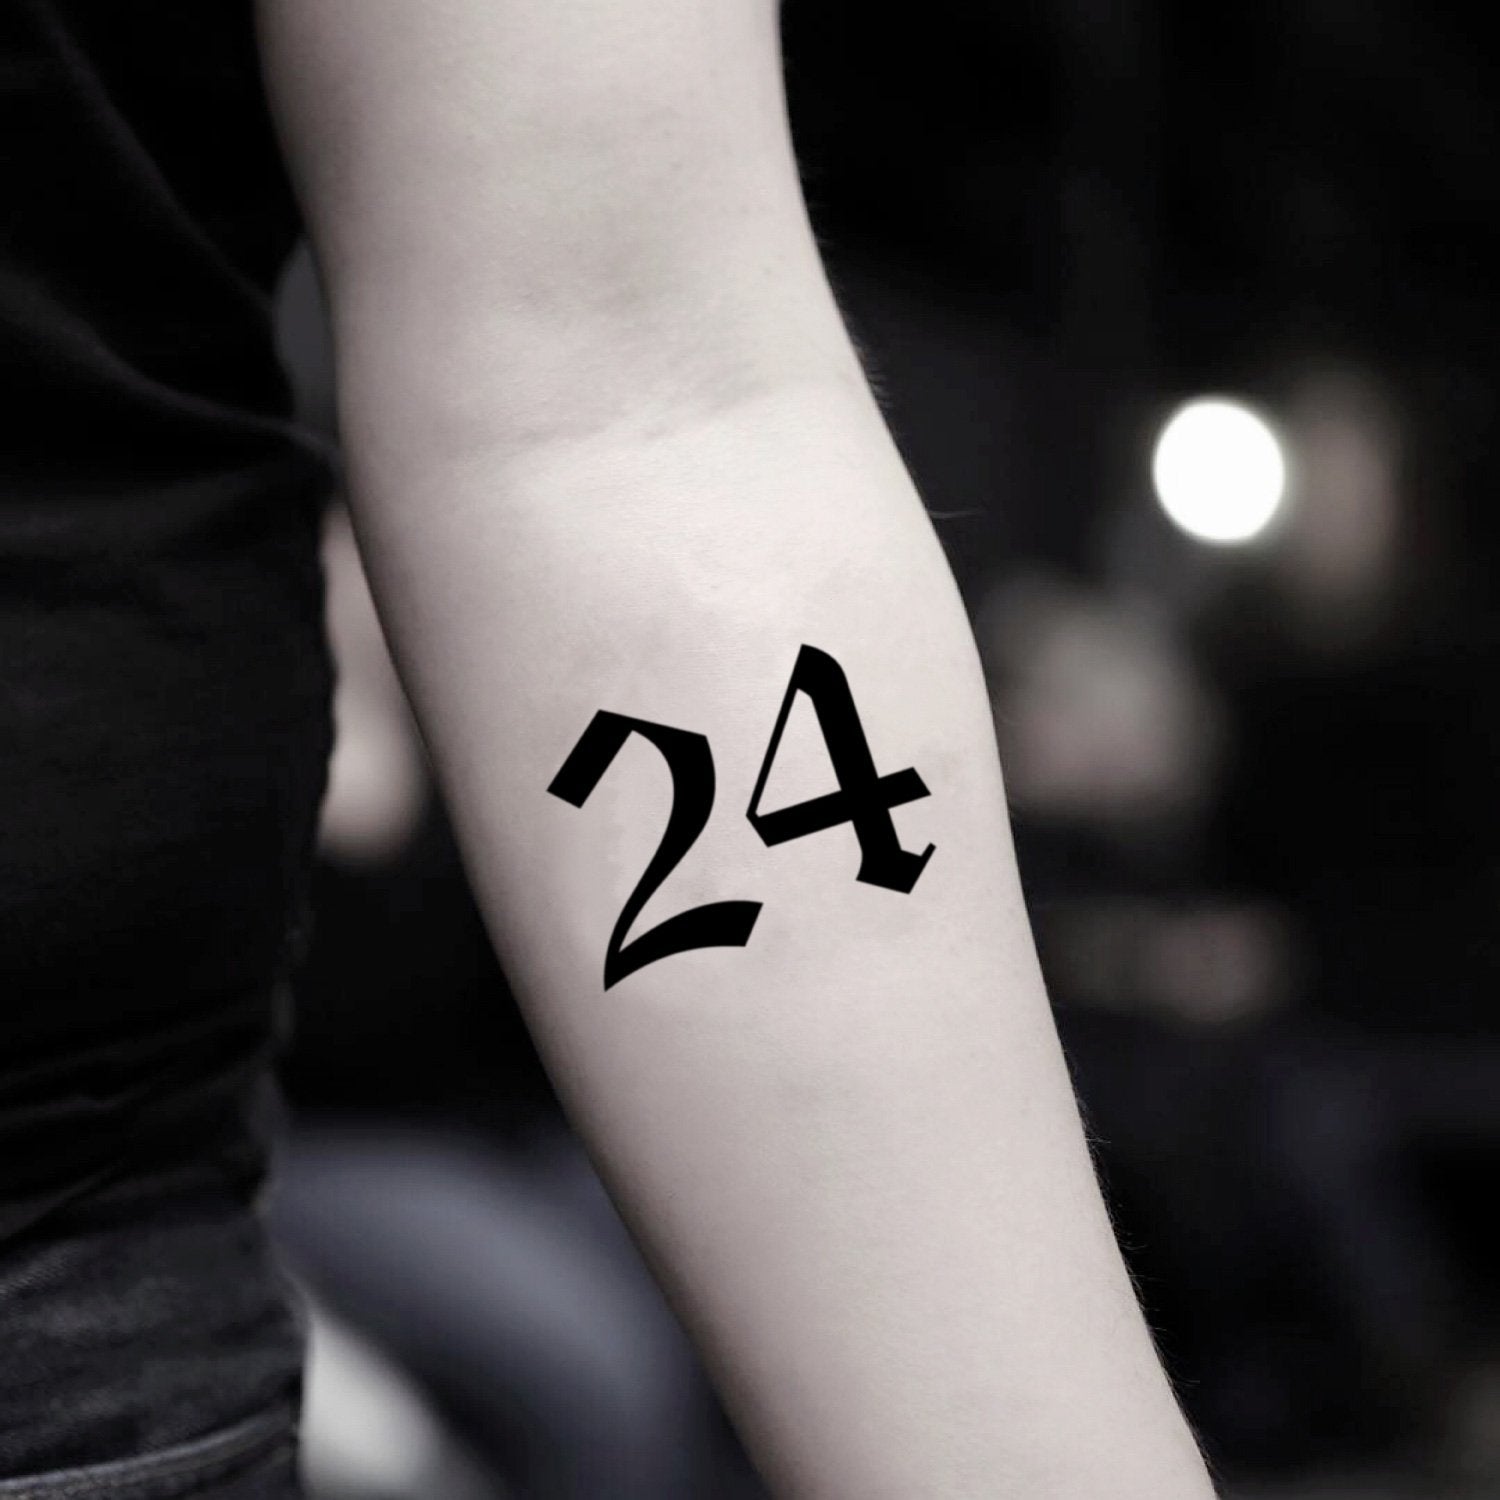 fake small kobe bryant 24 lettering temporary tattoo sticker design idea on inner arm